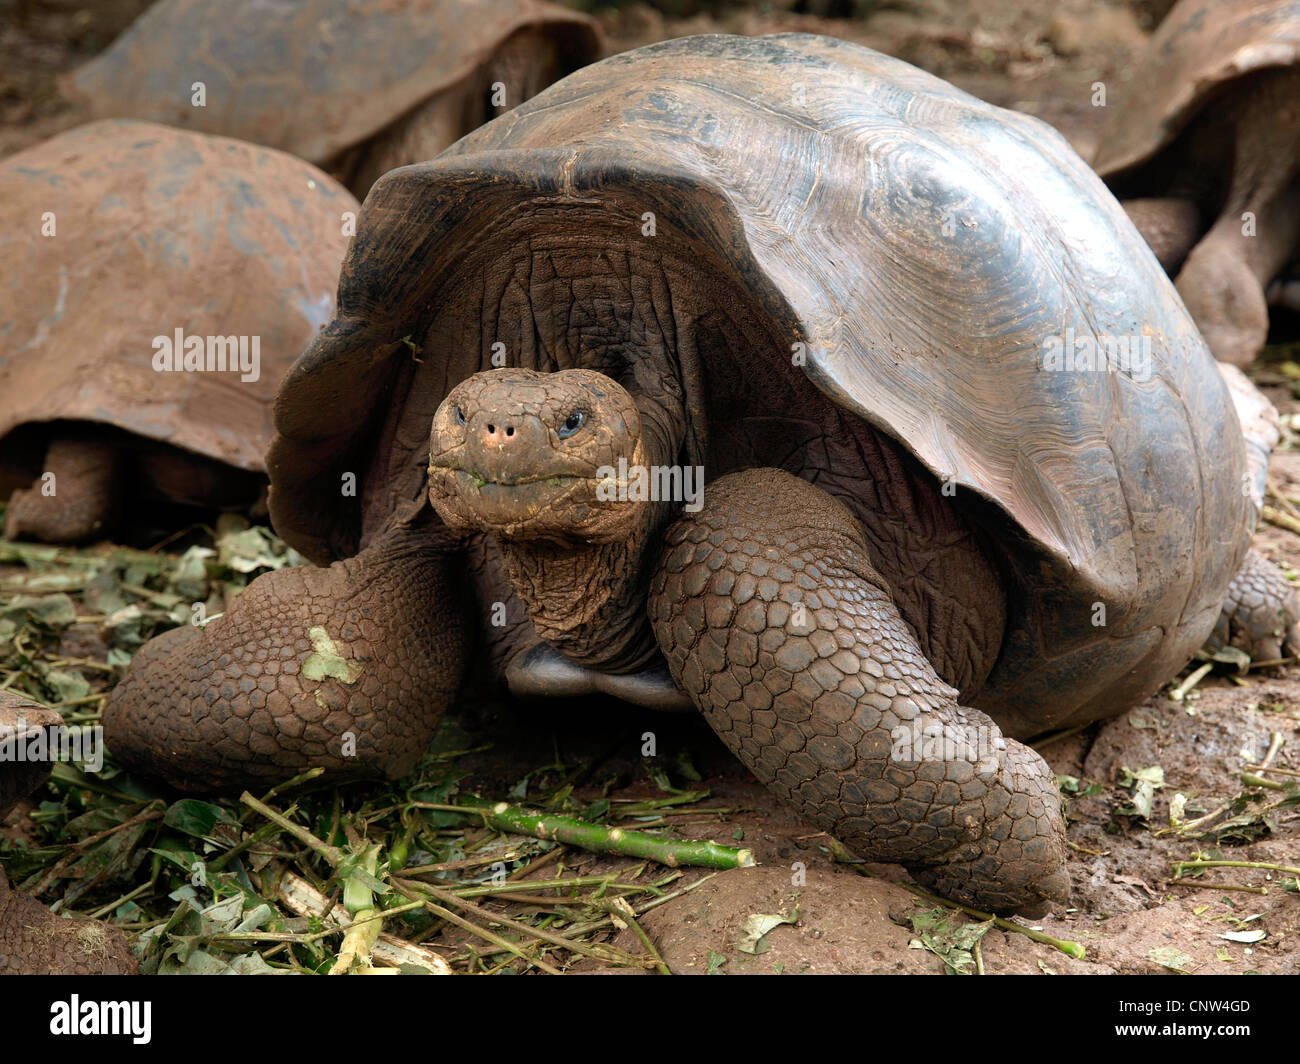 Galapagos giant tortoise (Geochelone elephantopus, Geochelone nigra, Testudo elephantopus, Chelonoides elephantopus), portrait, Ecuador, Galapagos Islands Stock Photo